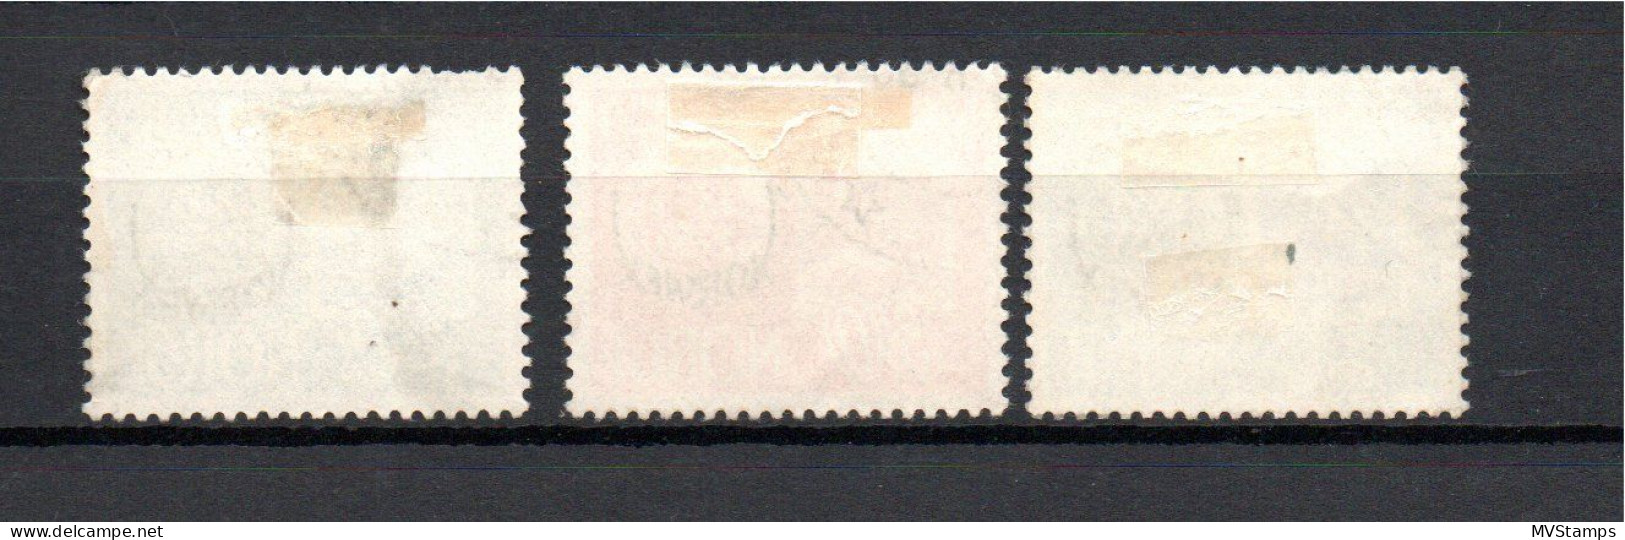 Norway 1955 Set Overprinted NORWEX Stamps (Michel 393/95) Nice Used - Gebraucht